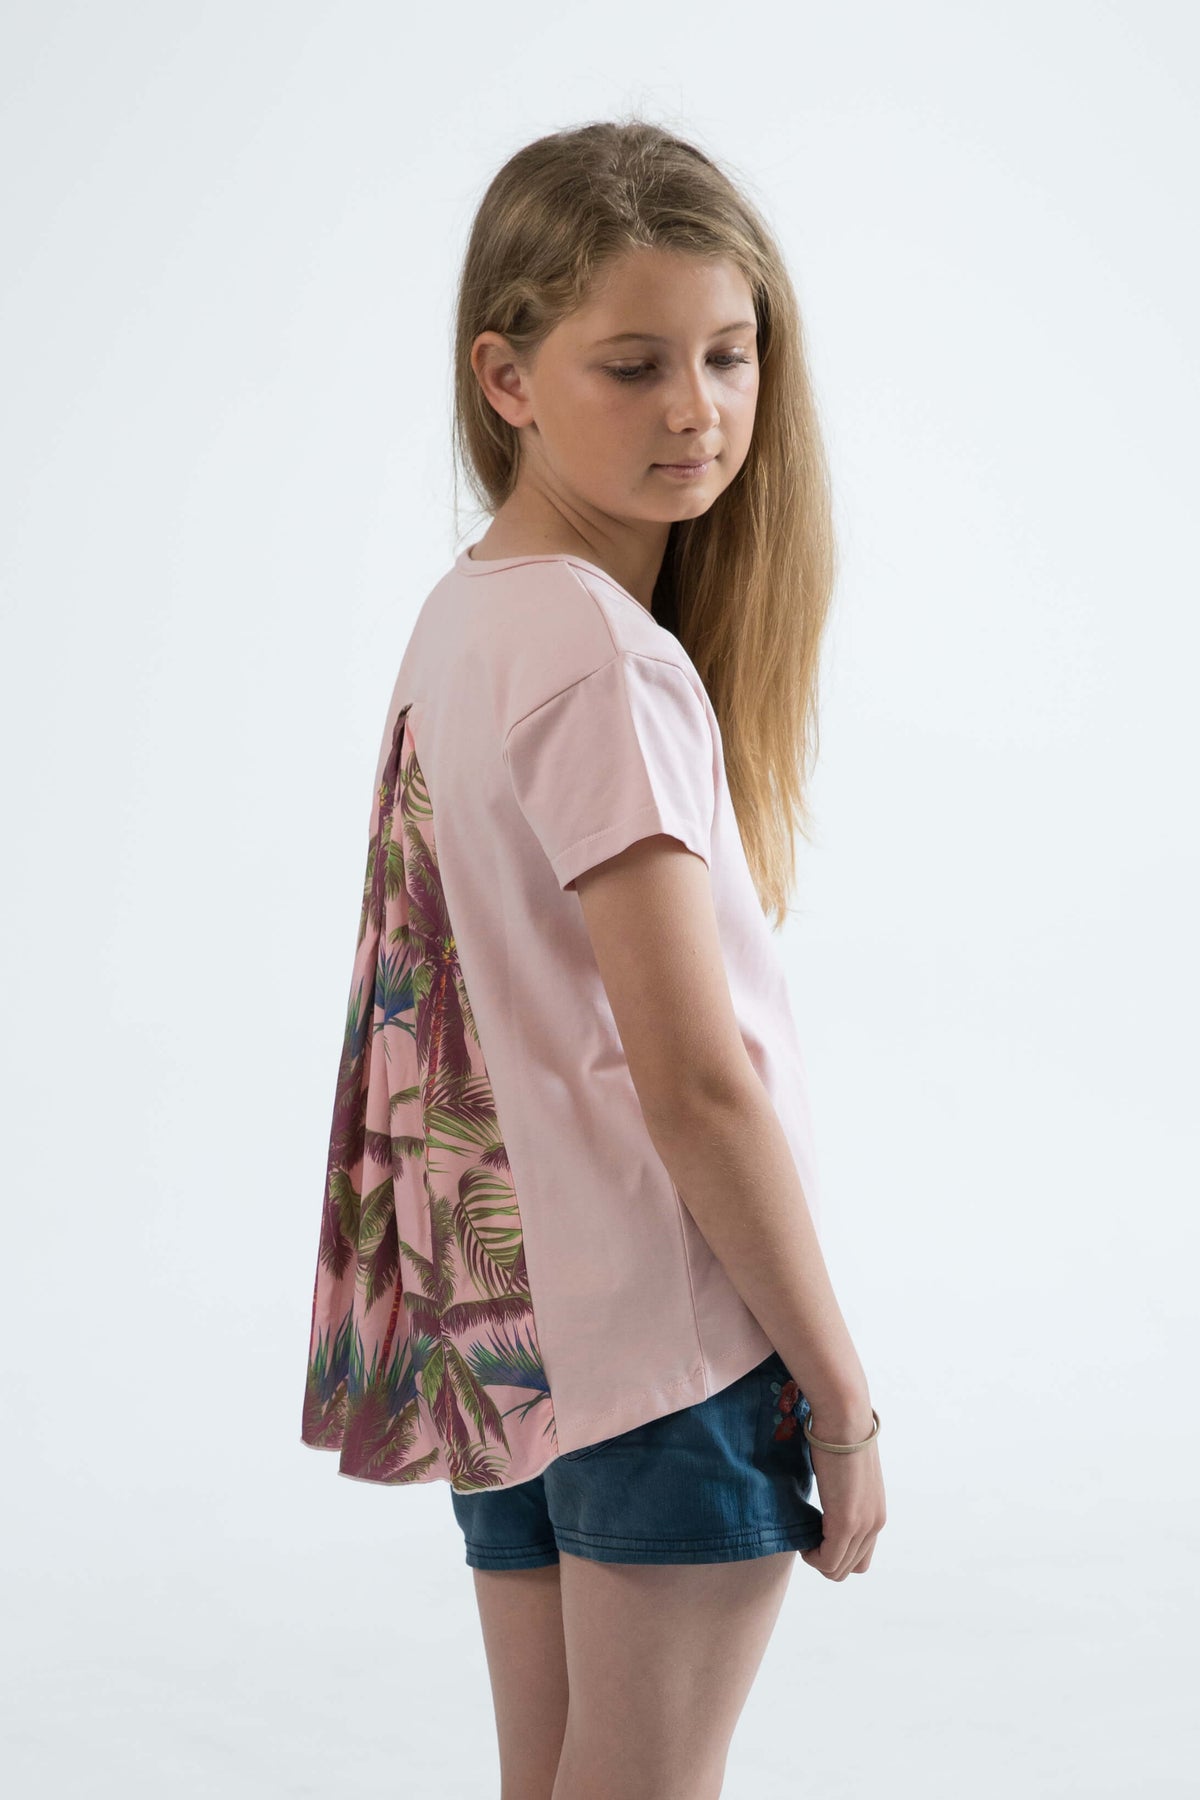 pink teen girls clothing short sleeve t-shirt top palm tree print by Love Haidee Australia side view